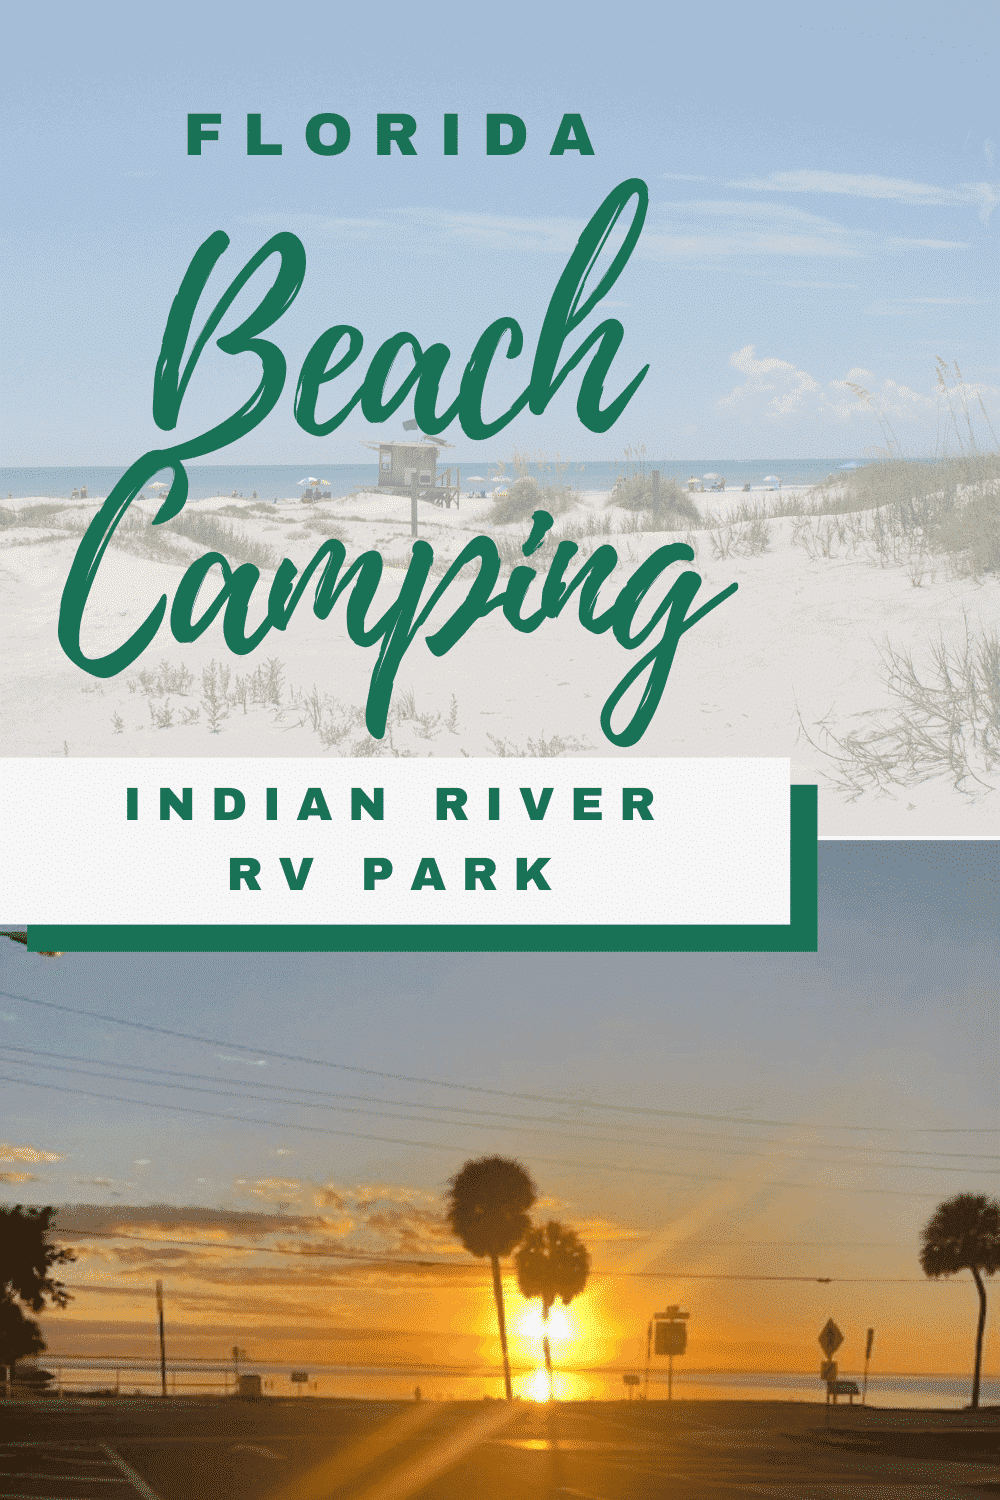 Indian River RV Park Florida